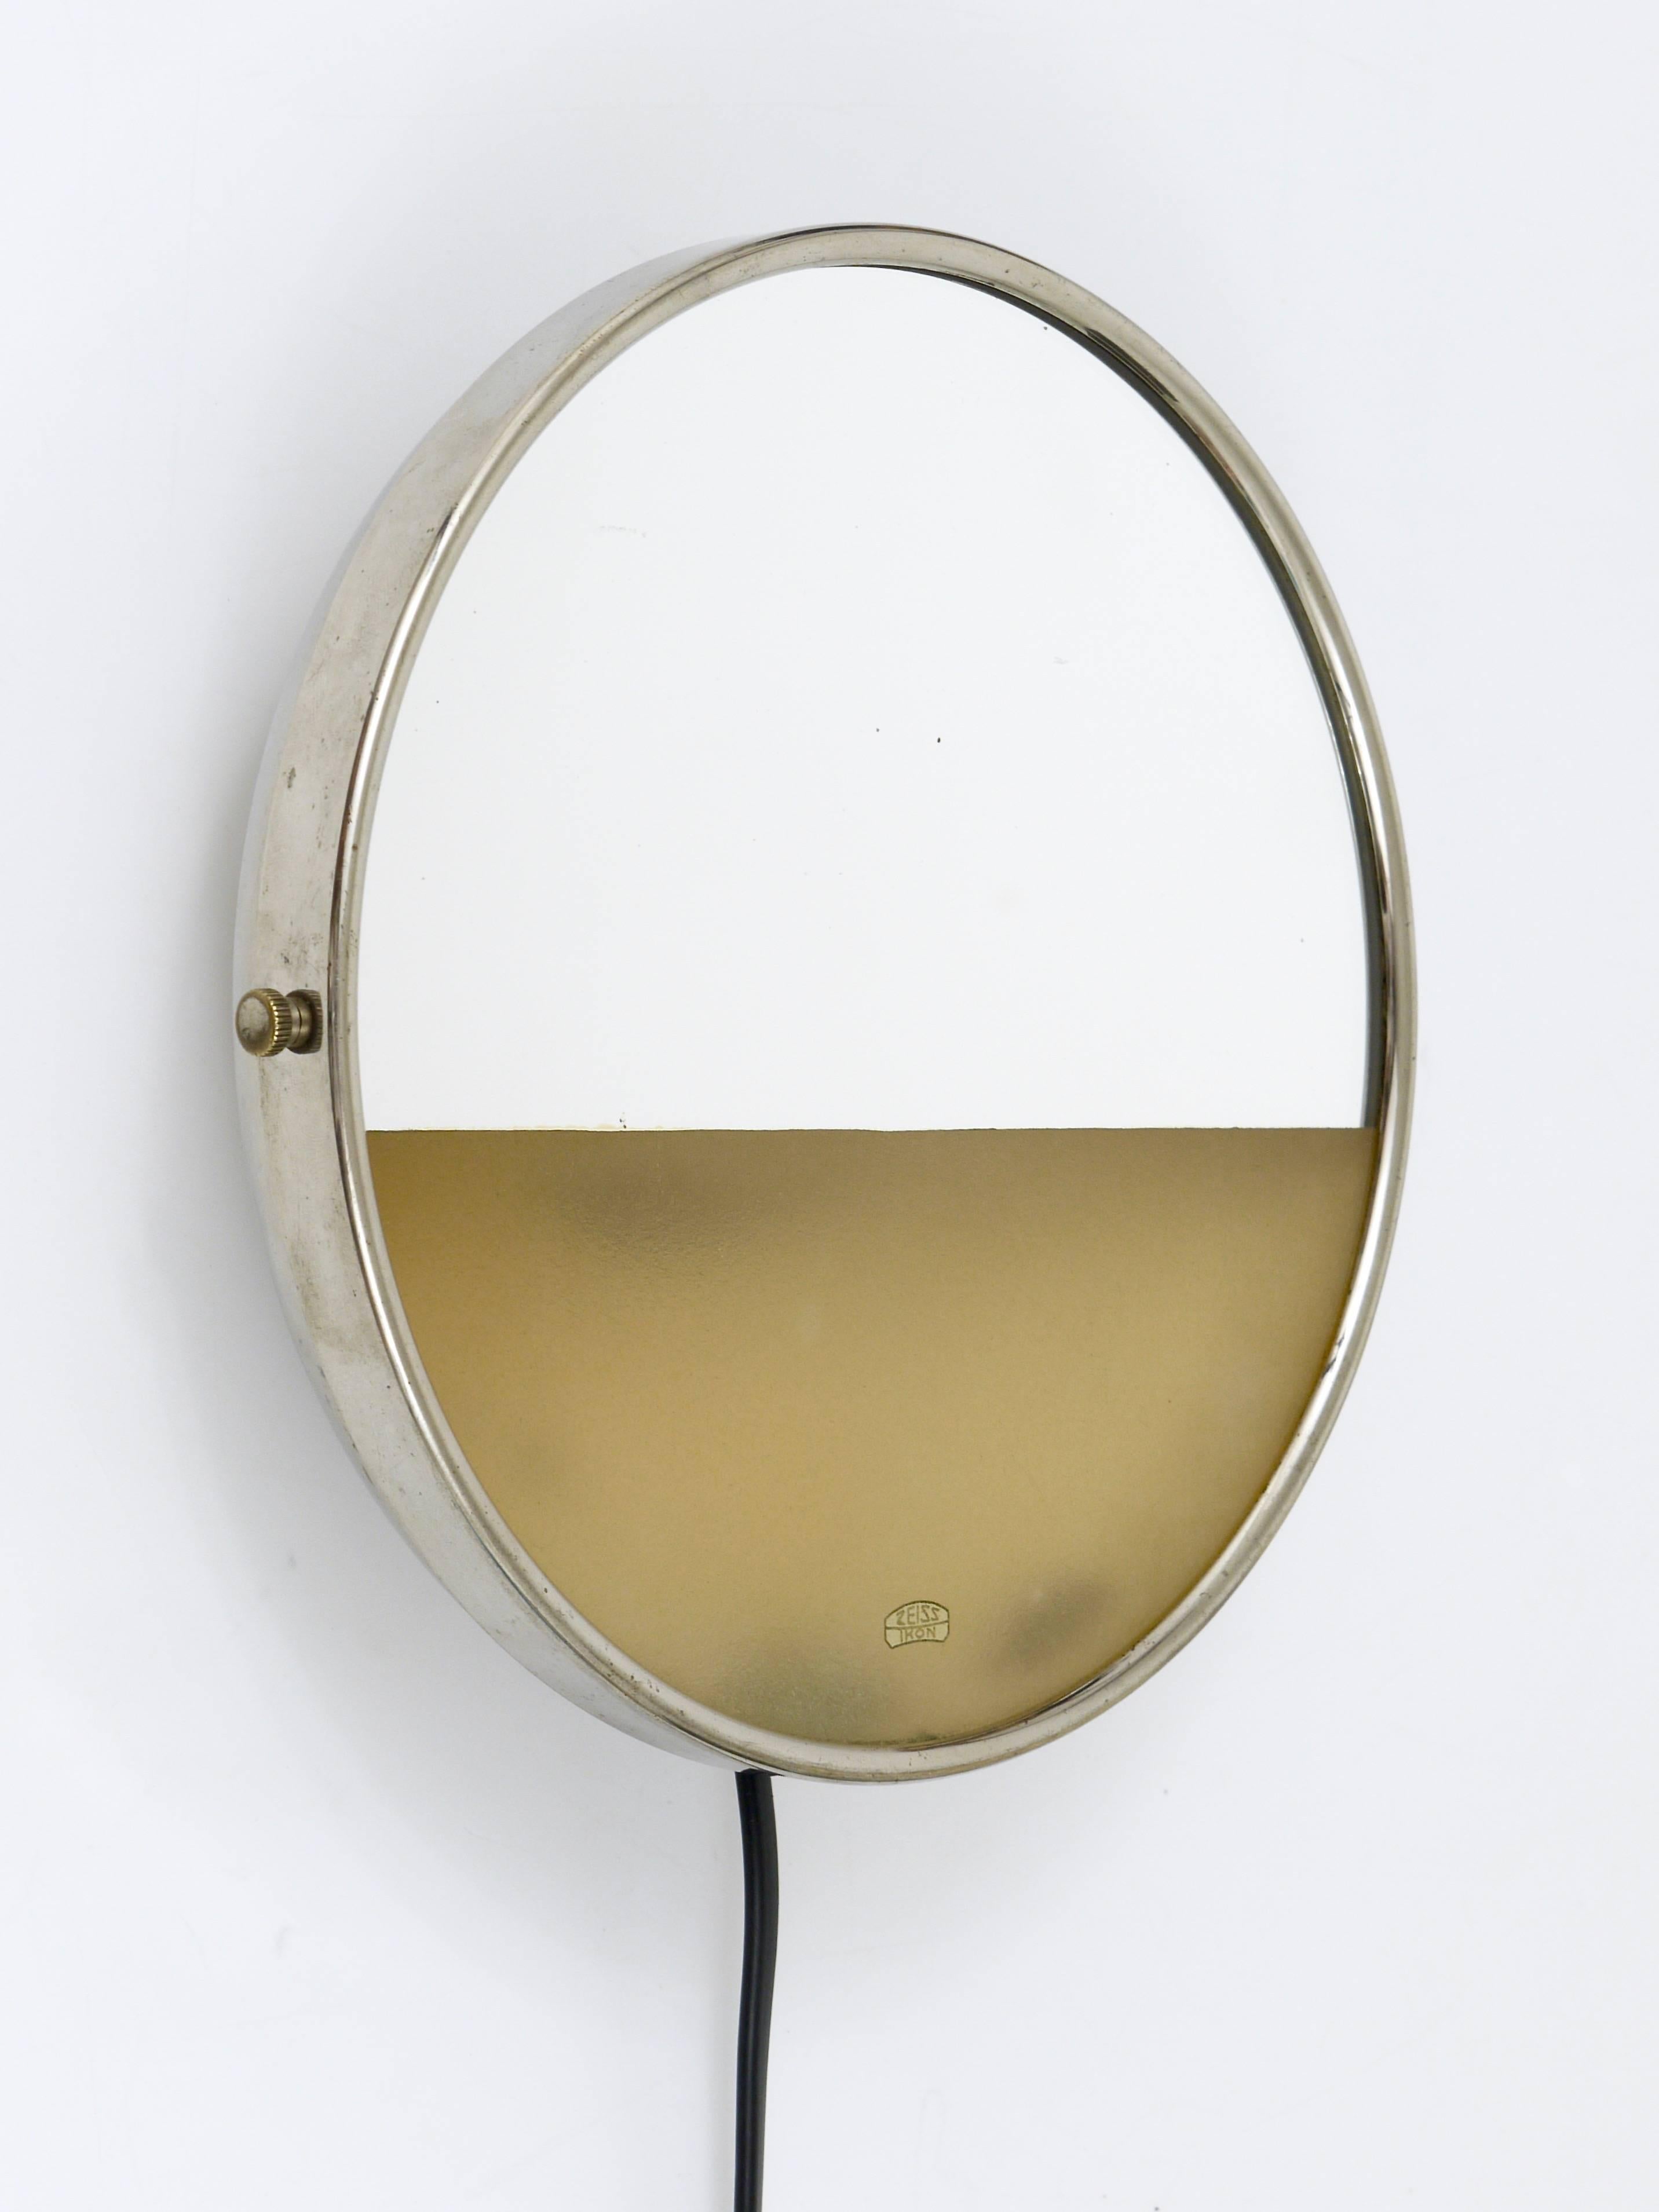 Mid-20th Century Illuminated Shaving or Vanity Mirror by Marcel Breuer, Bauhaus for Zeiss Ikon